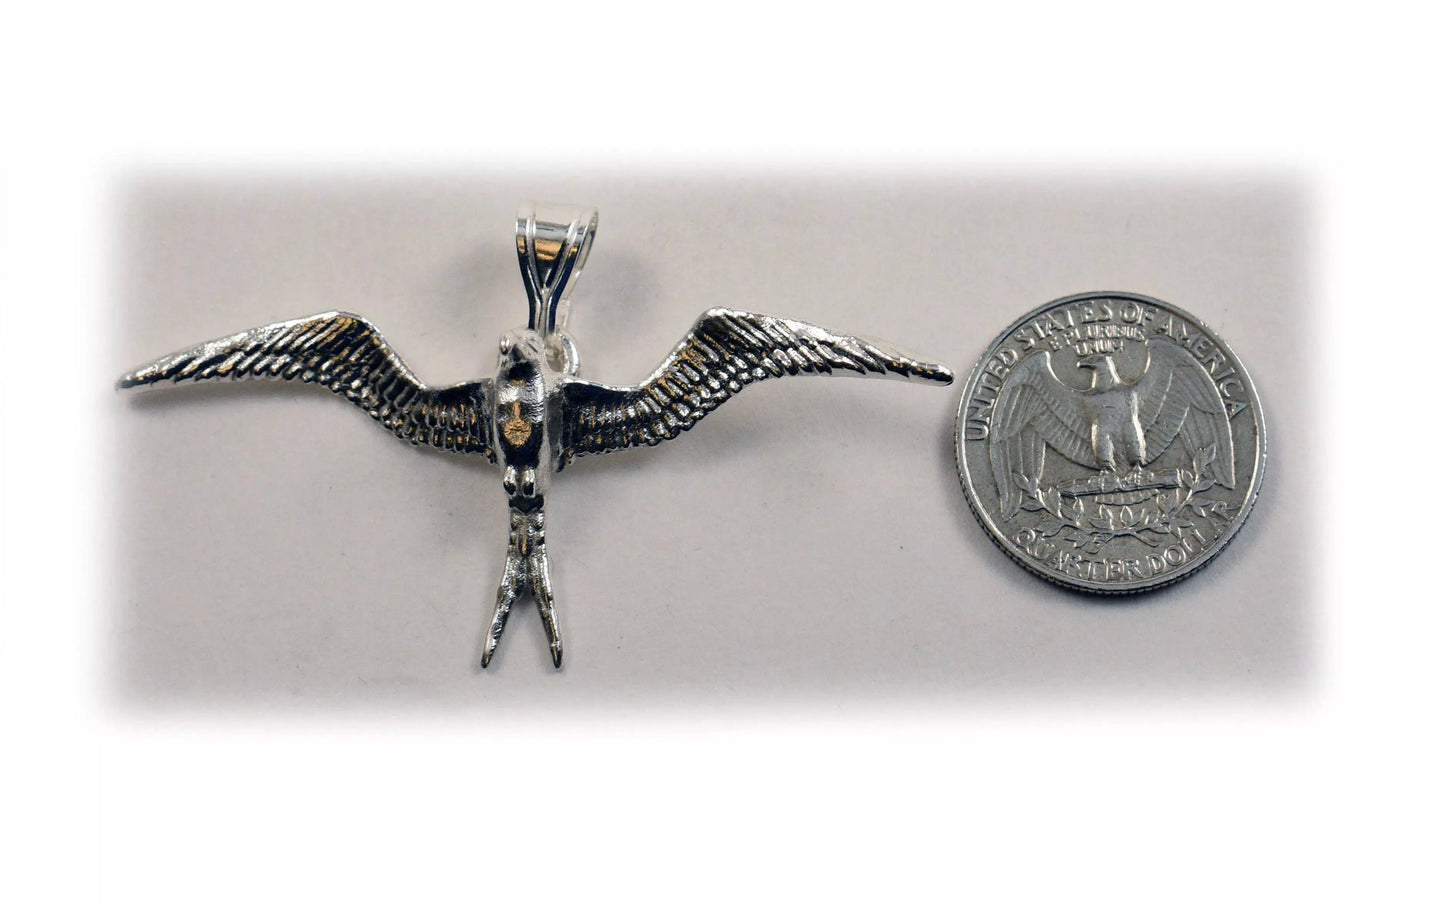 Frigatebird "Female" Pendant - Large